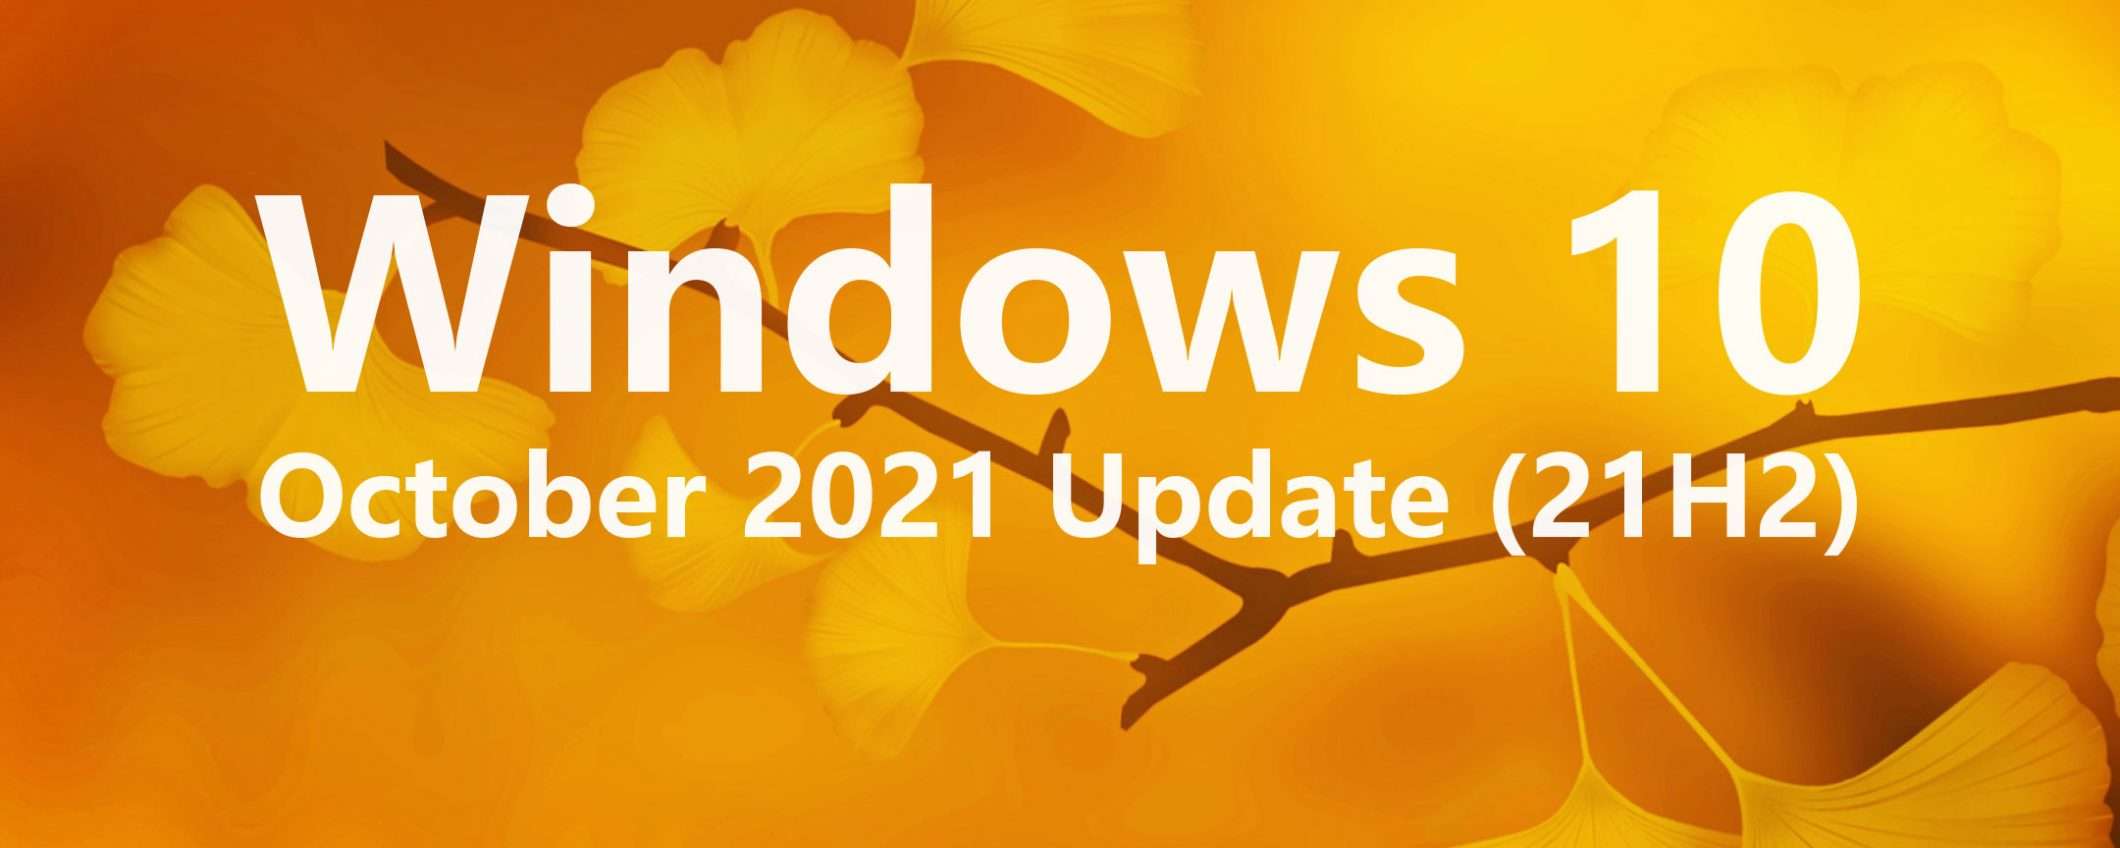 Windows 10 21H2 (October 2021 Update): ci siamo